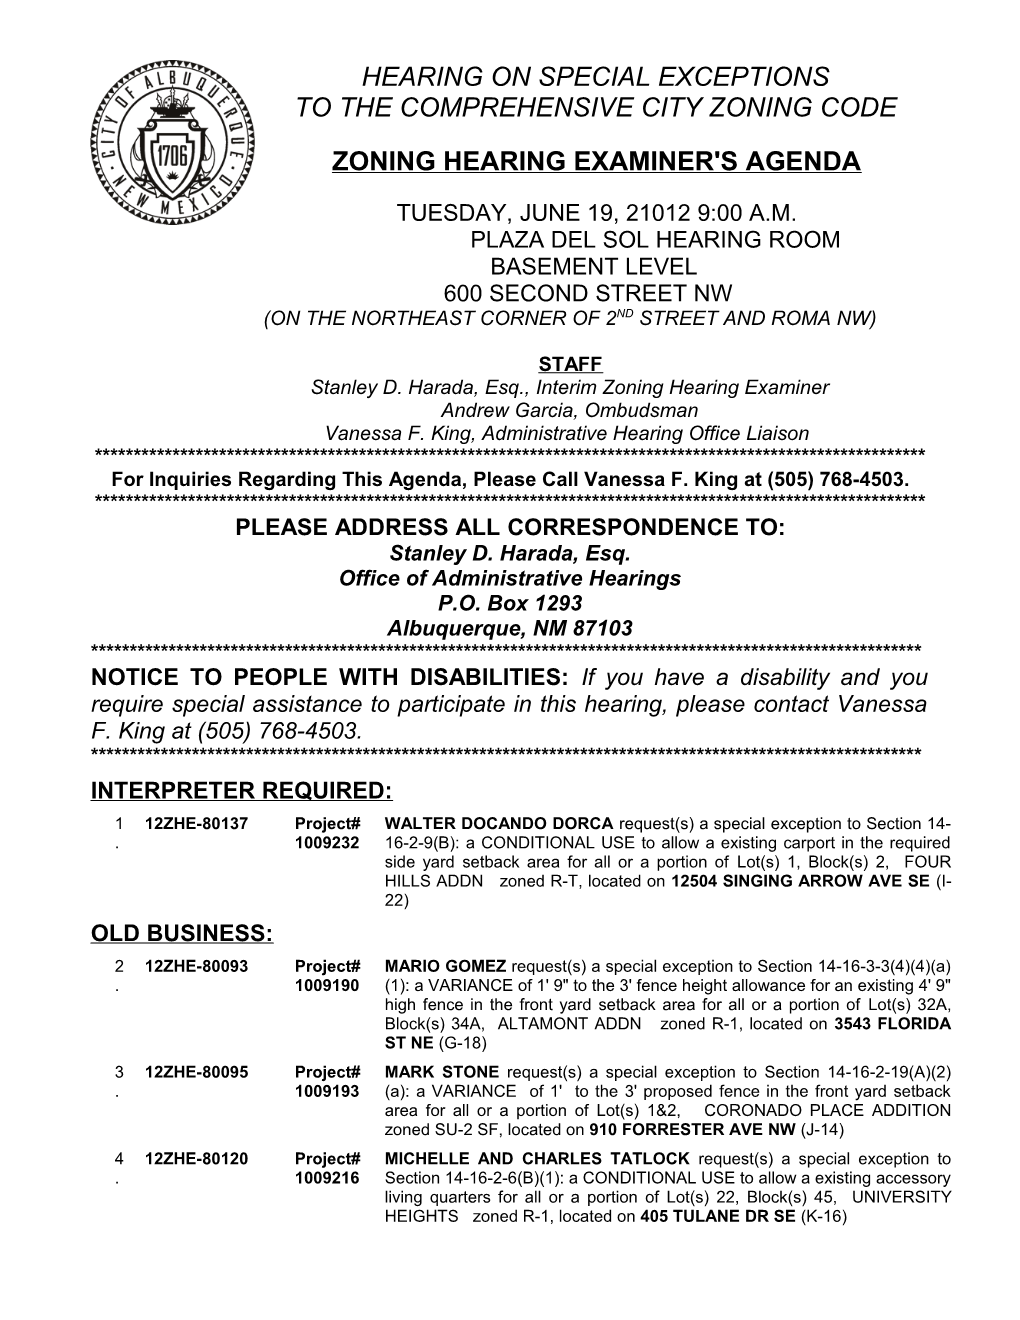 Zoning Hearing Examiner's Agenda s2